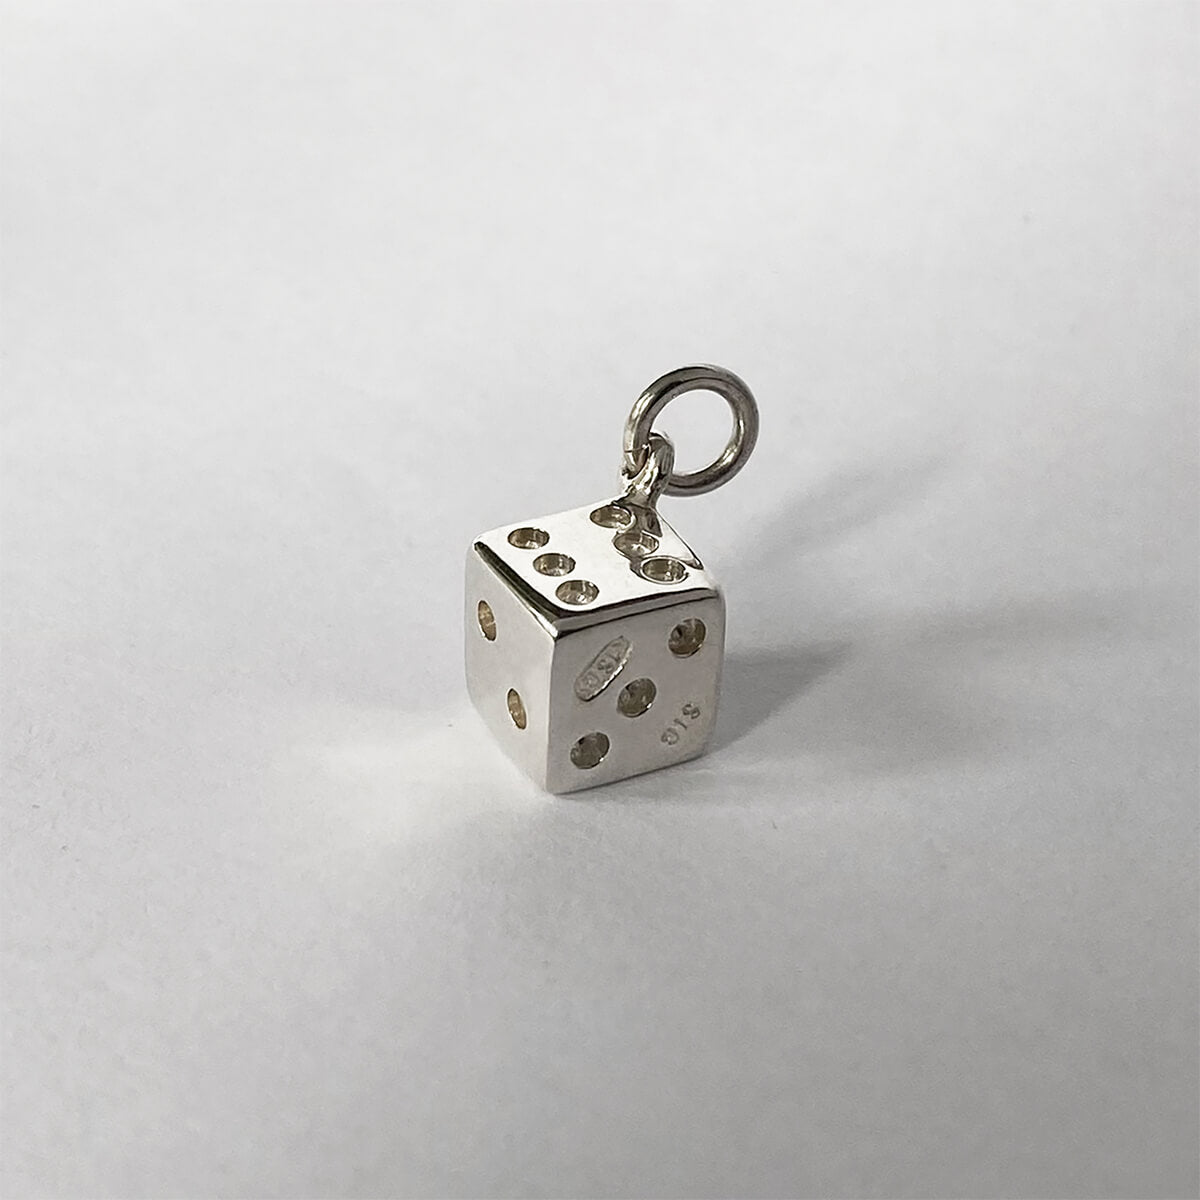 Die charm sterling silver dice pendant